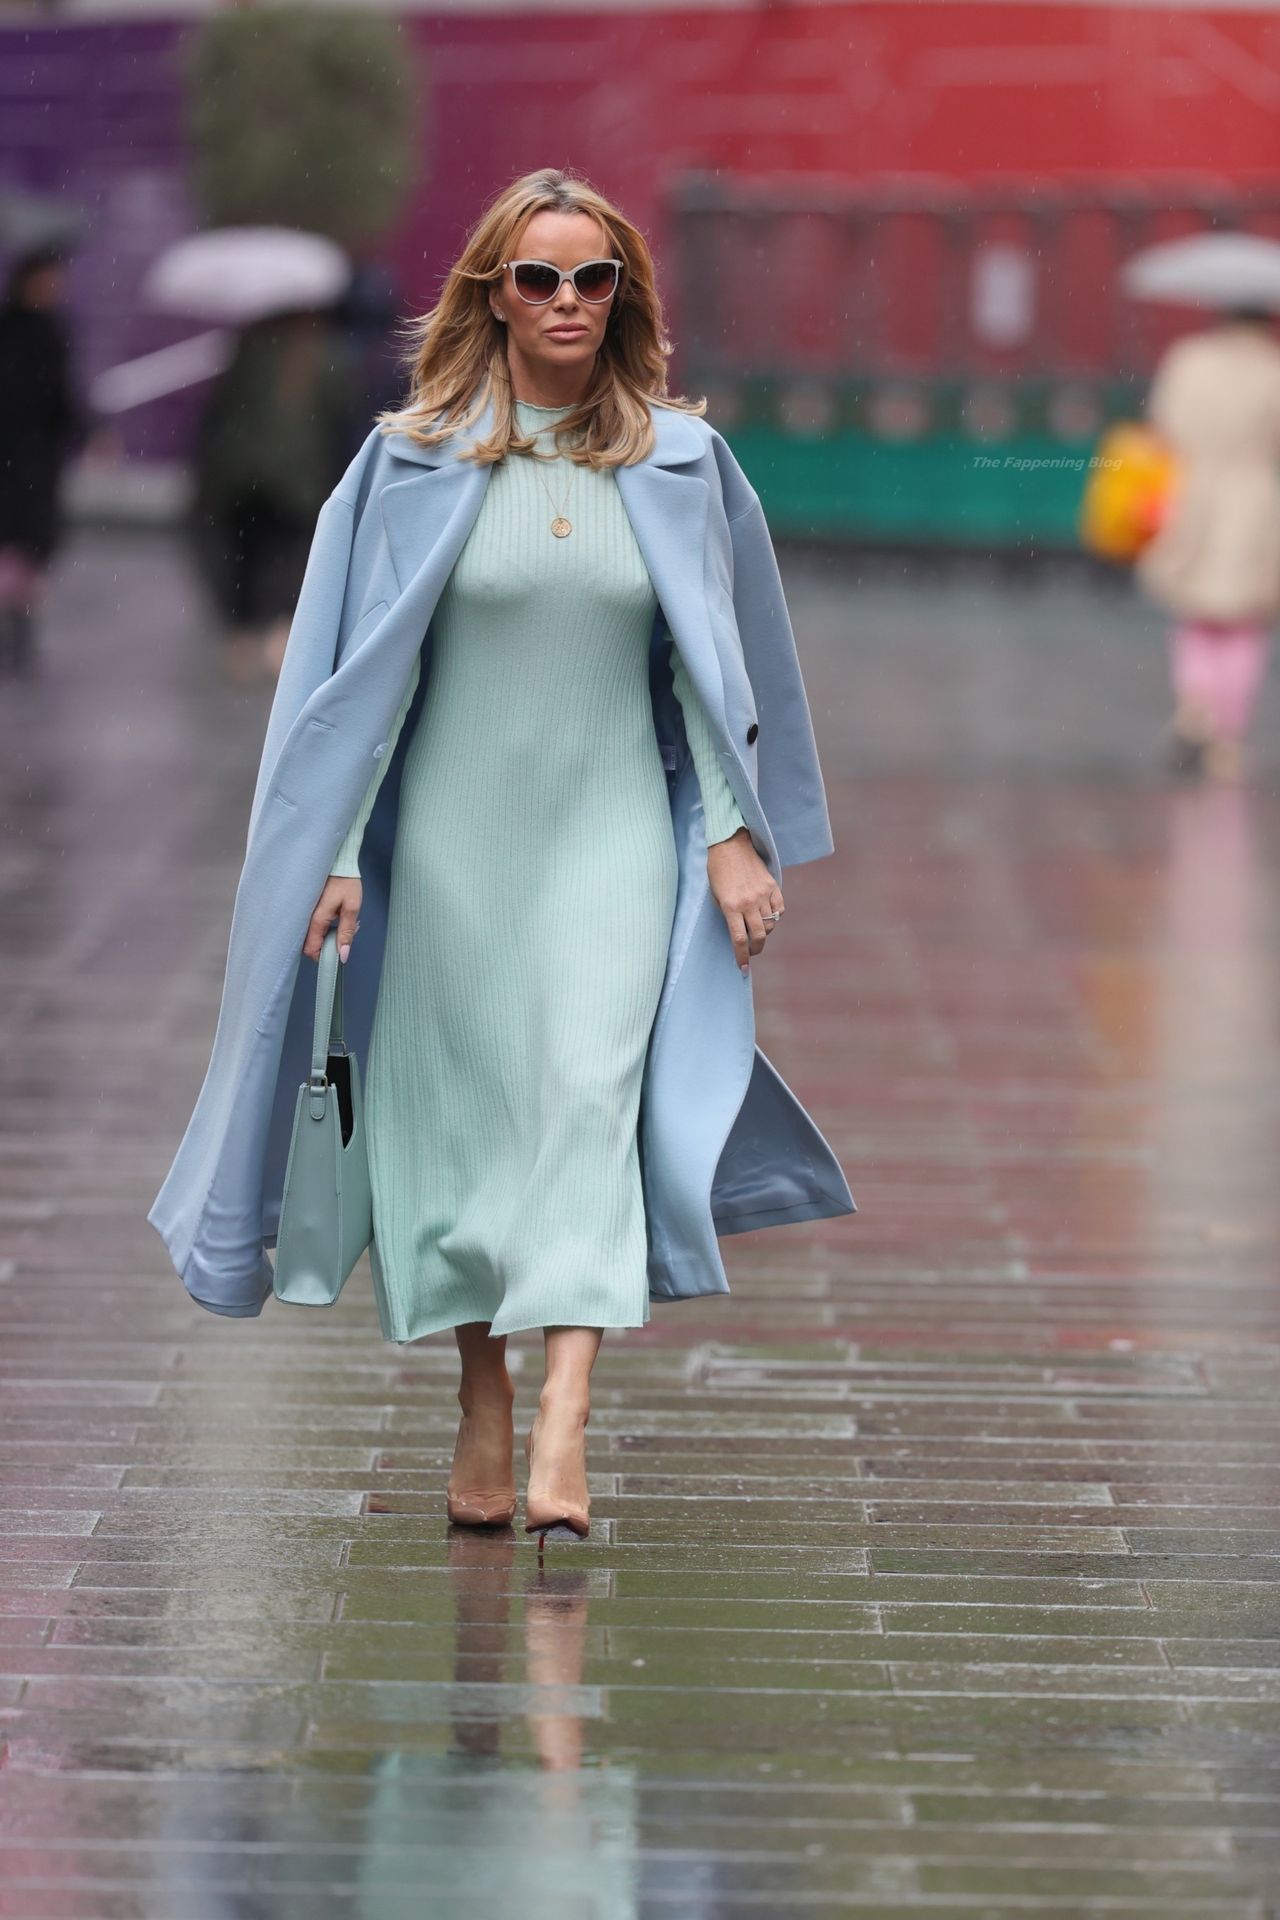 Amanda Holden Makes a Revealing Appearance Looks Sensational in London (74 Photos)